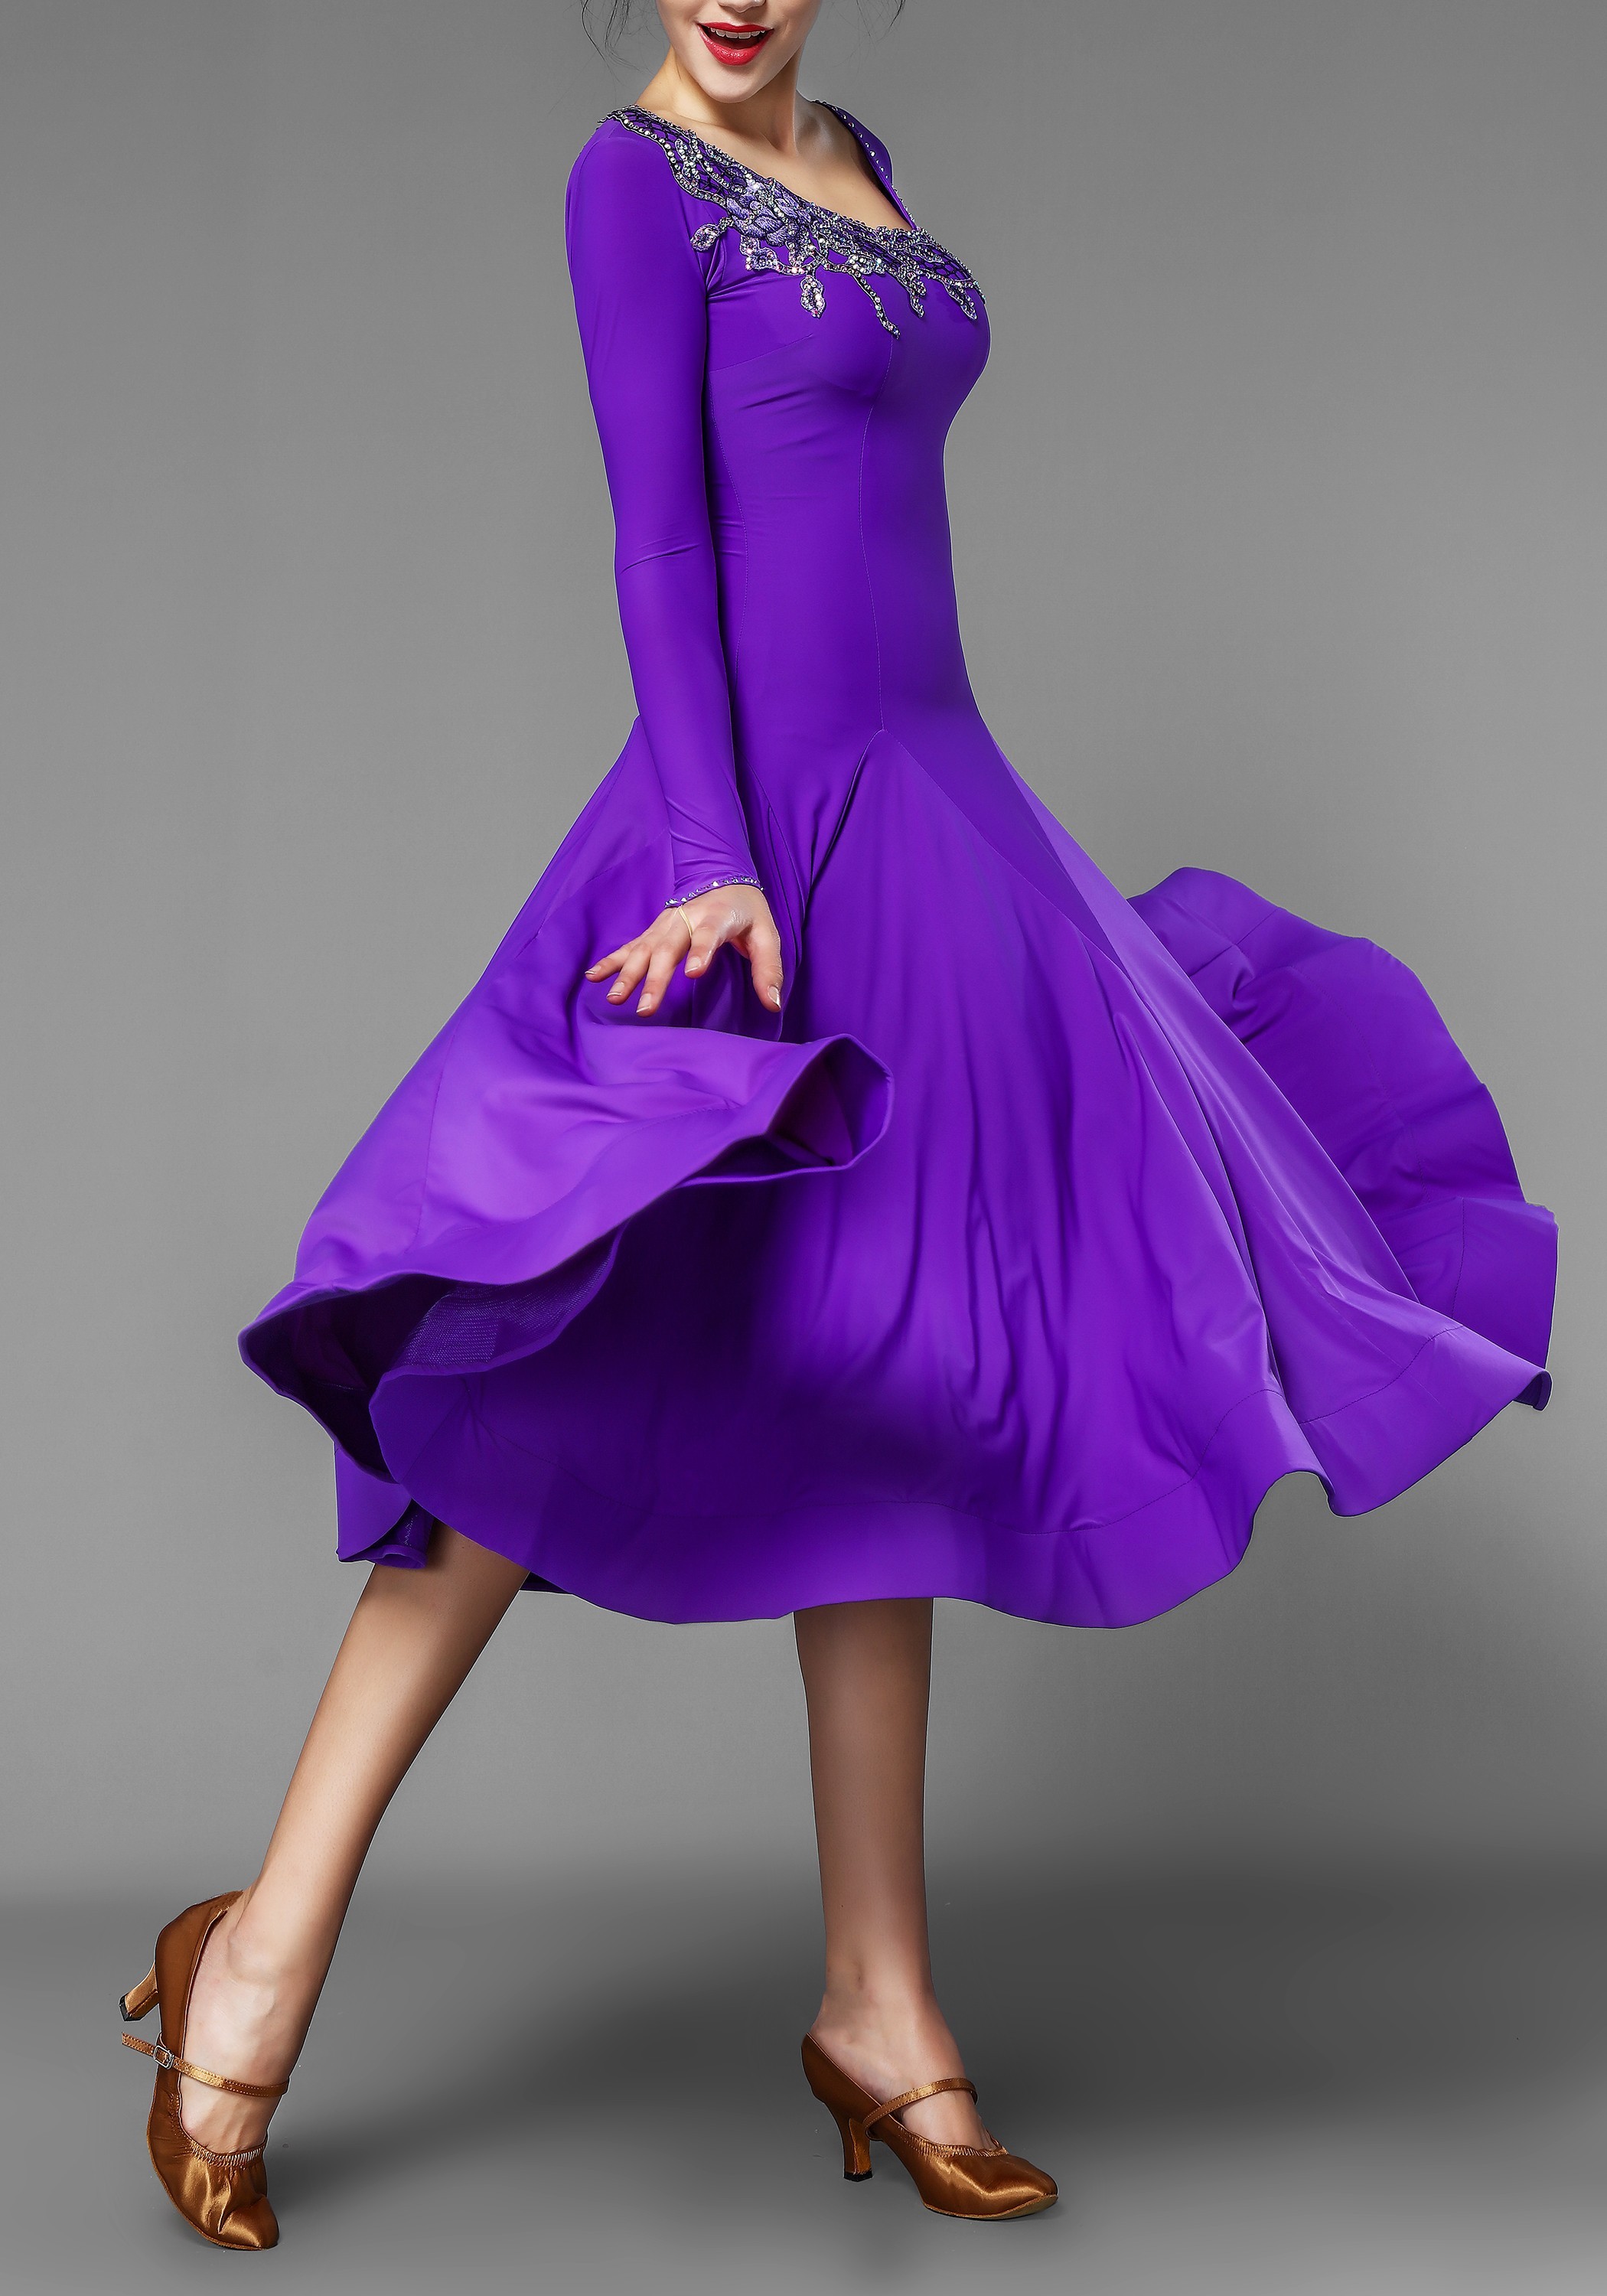 Royal Purple Ballroom Smooth Practice Dance Dress 